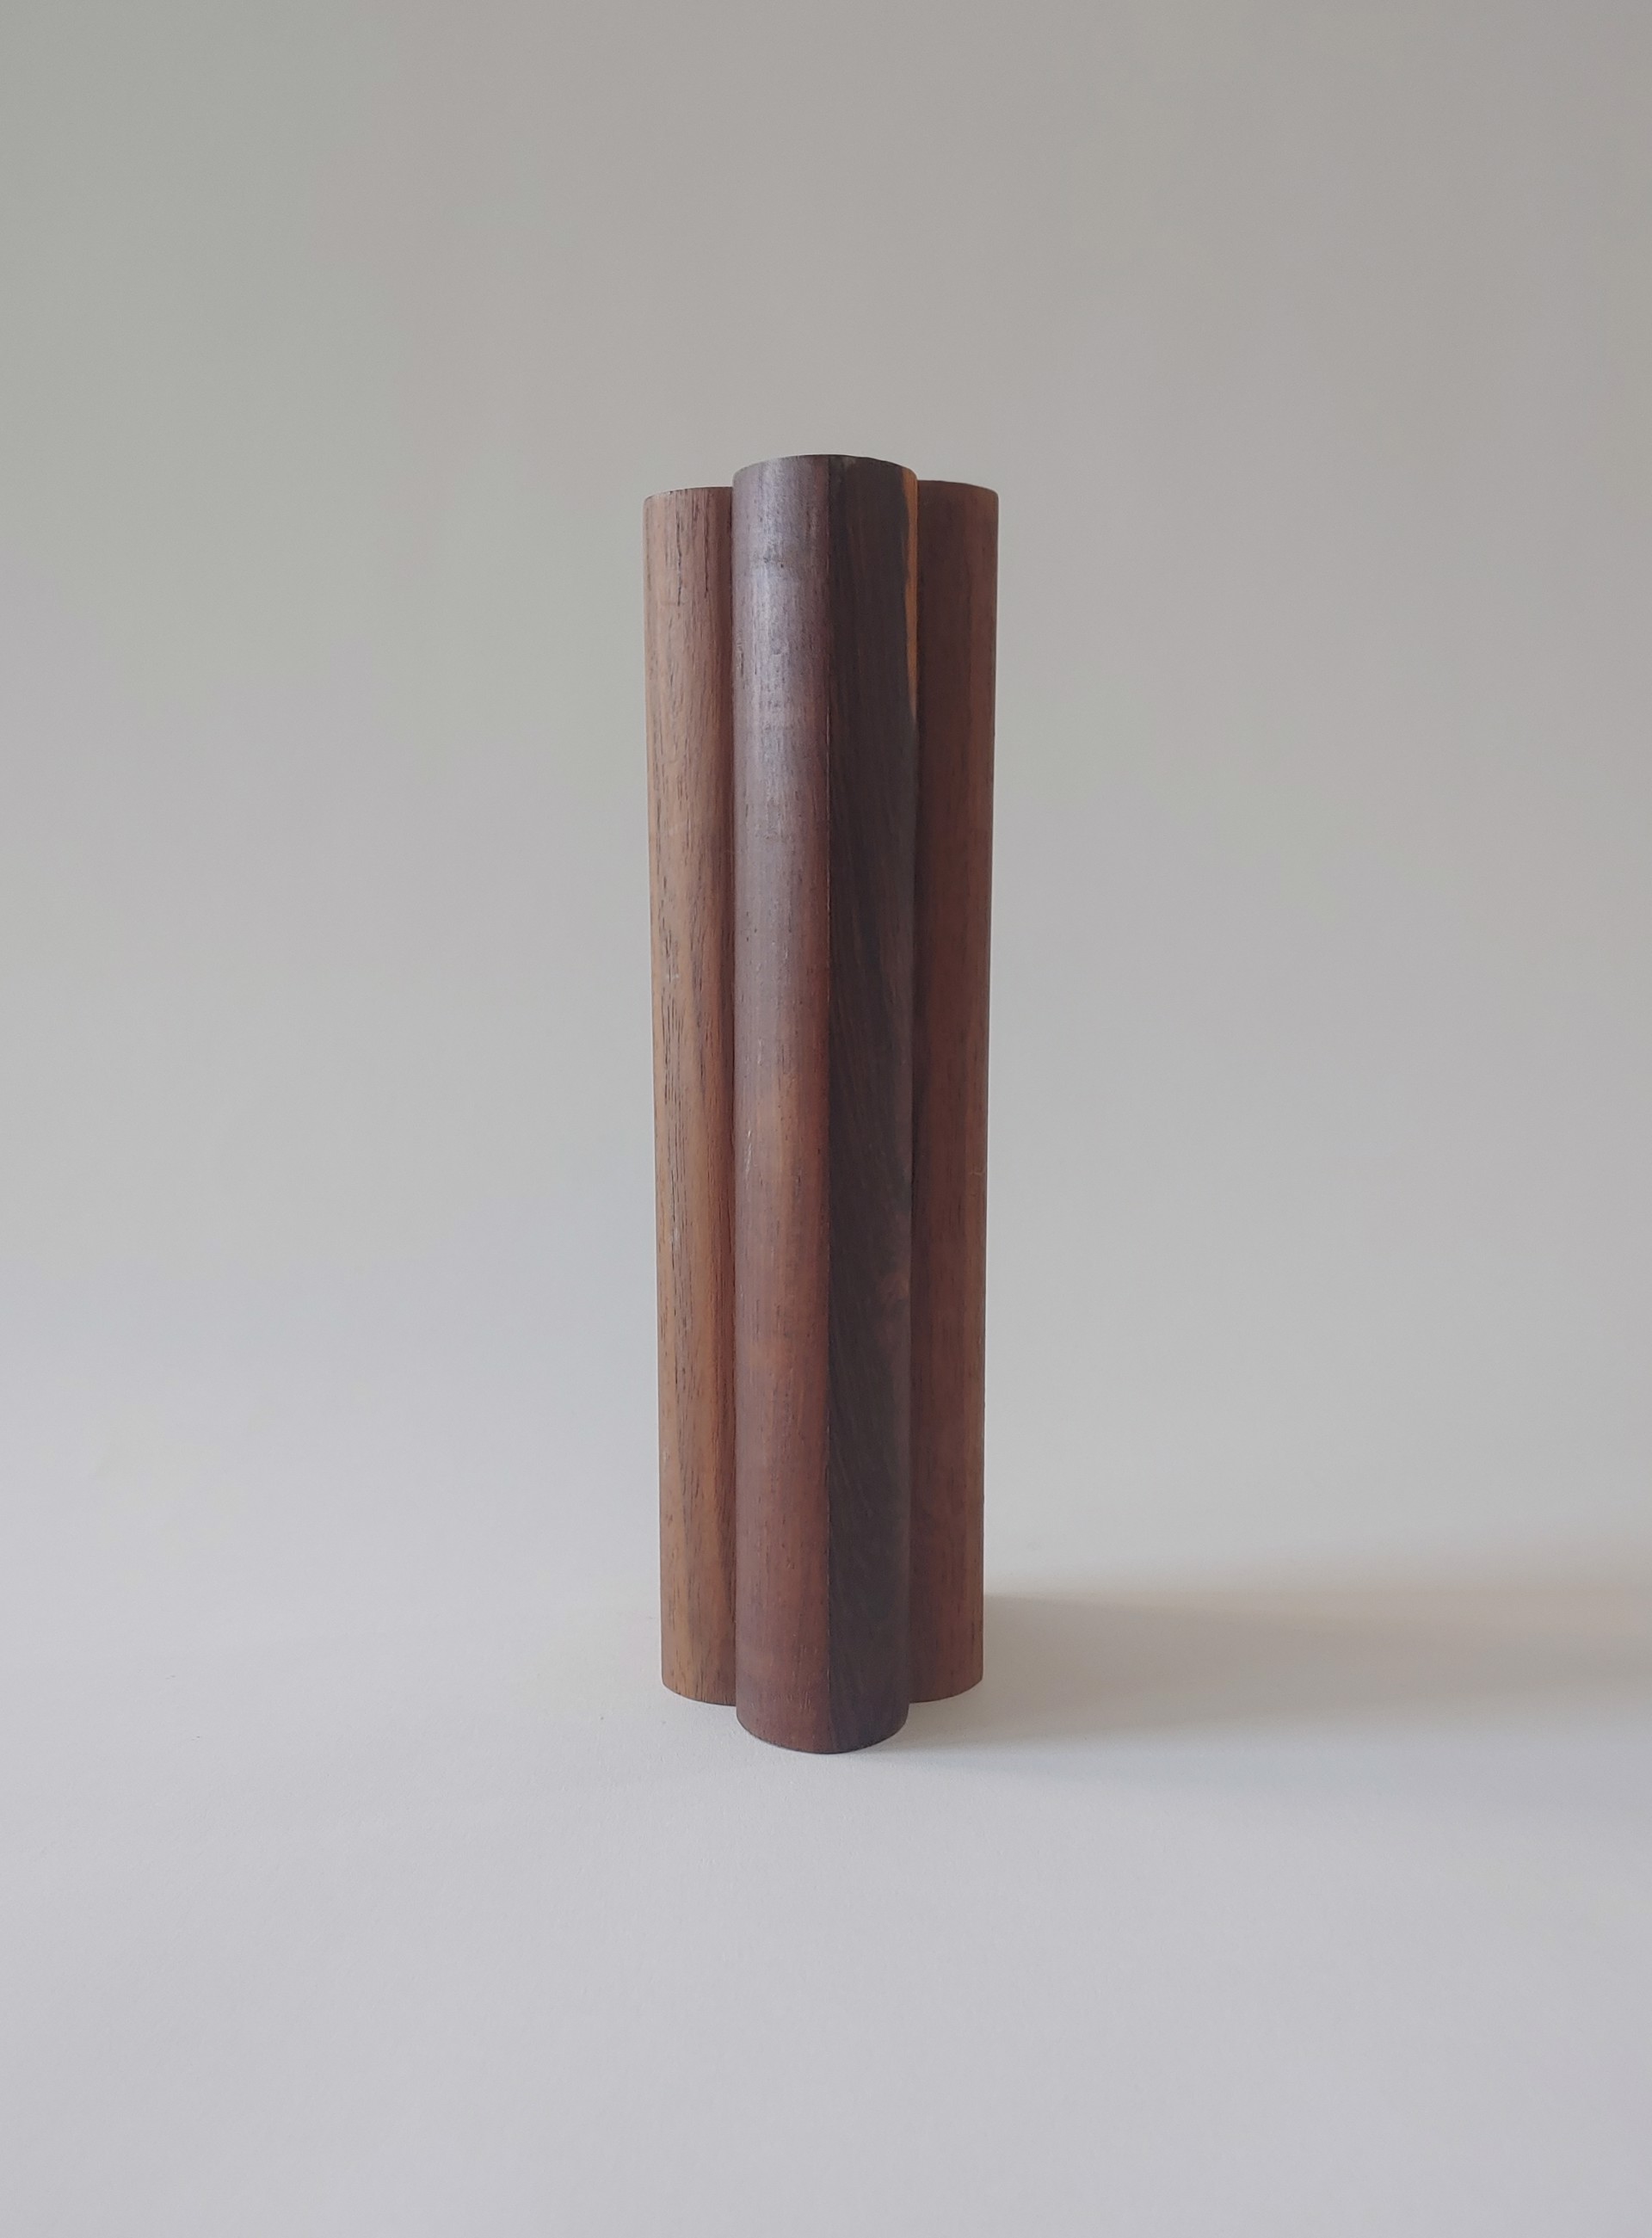 Model #3 - Wood Sculpture by David Amdur